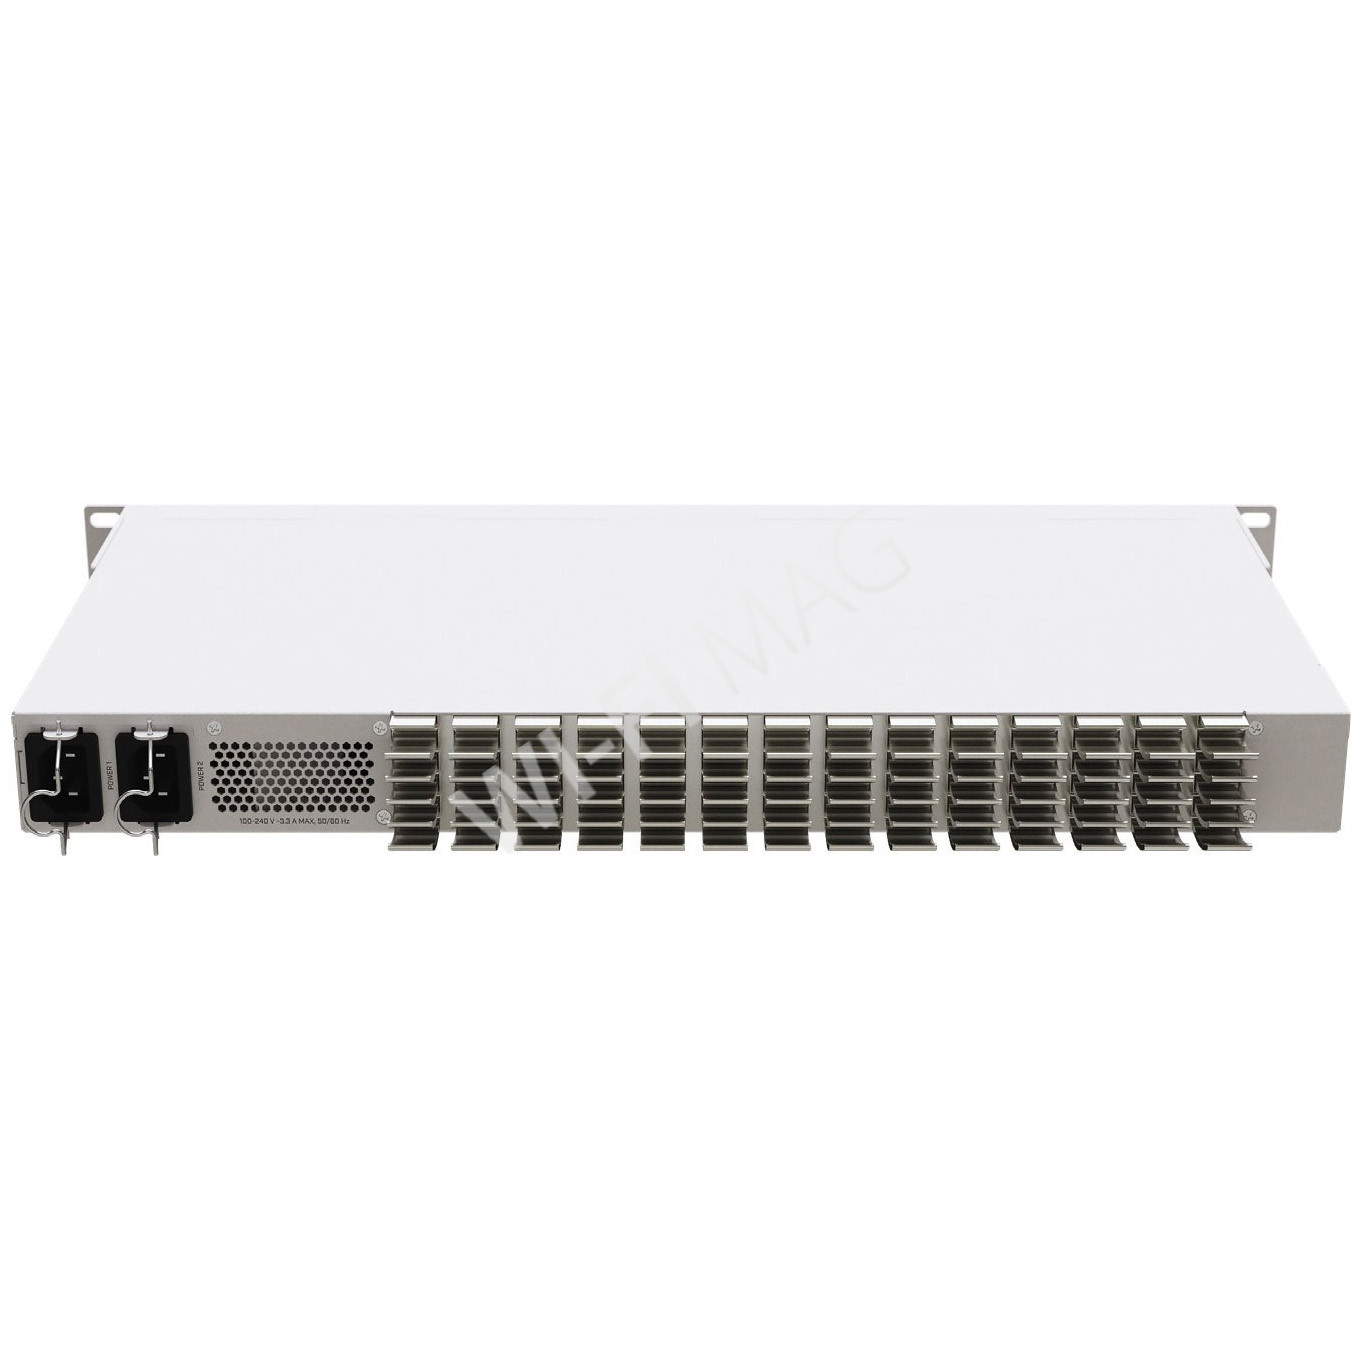 Mikrotik Cloud Router Switch CRS326-4C+20G+2Q+RM, коммутатор с функциями маршрутизатора